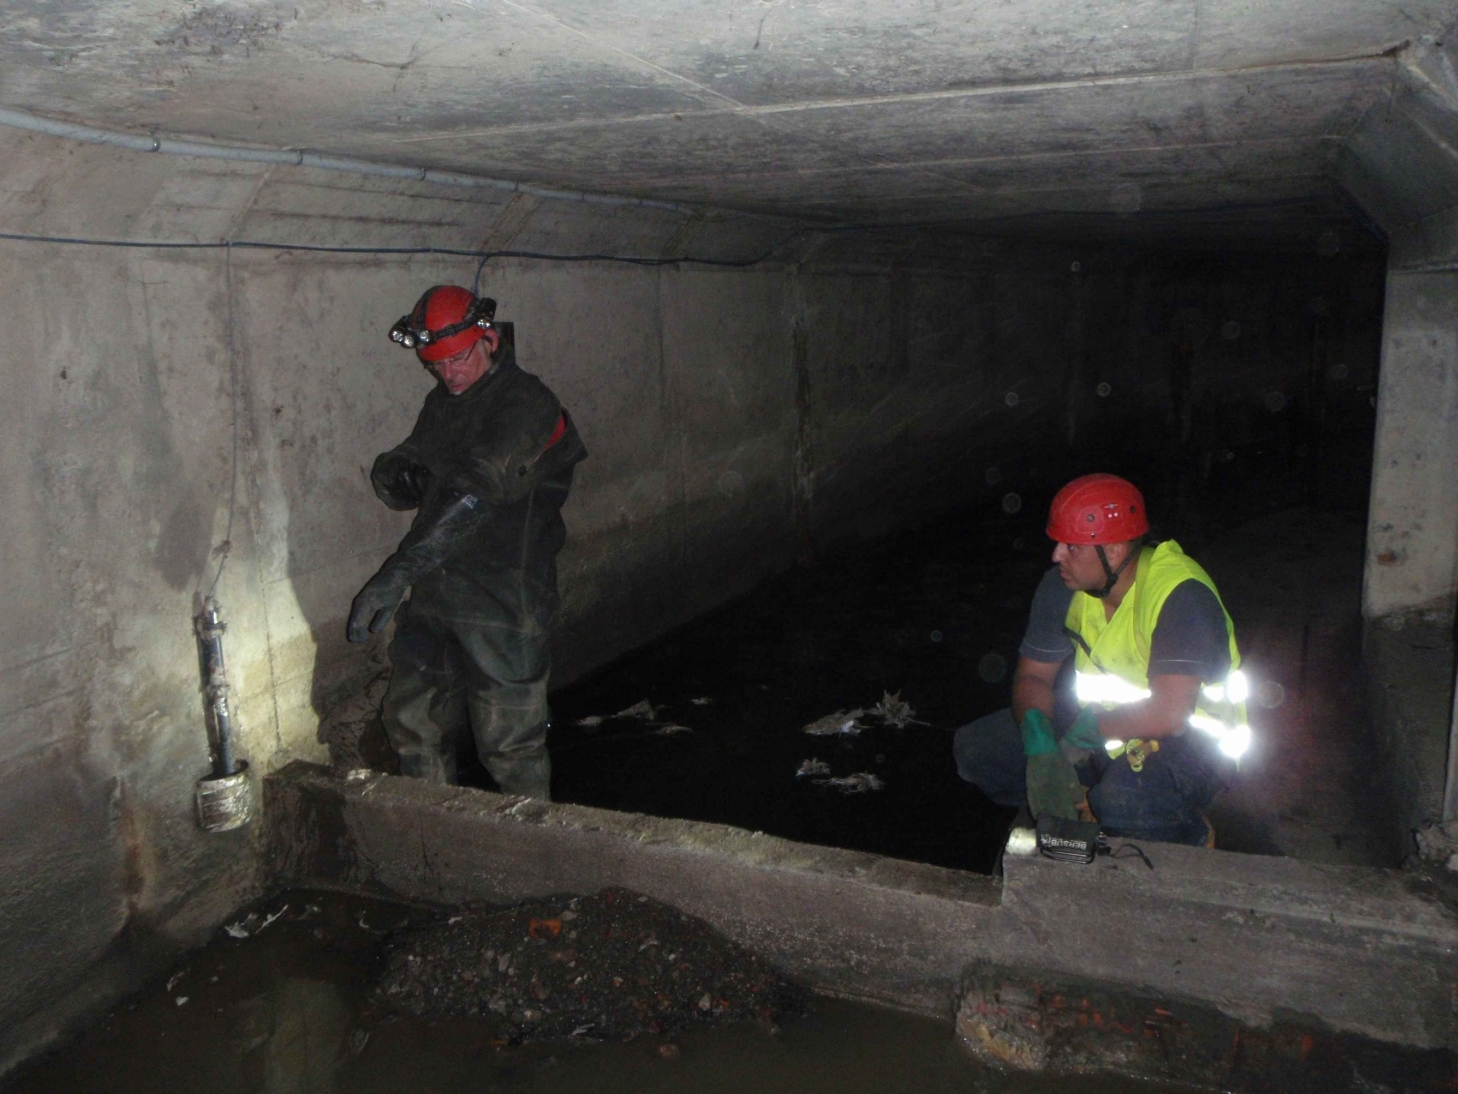 Edmonton water sewer construction inspection jobs